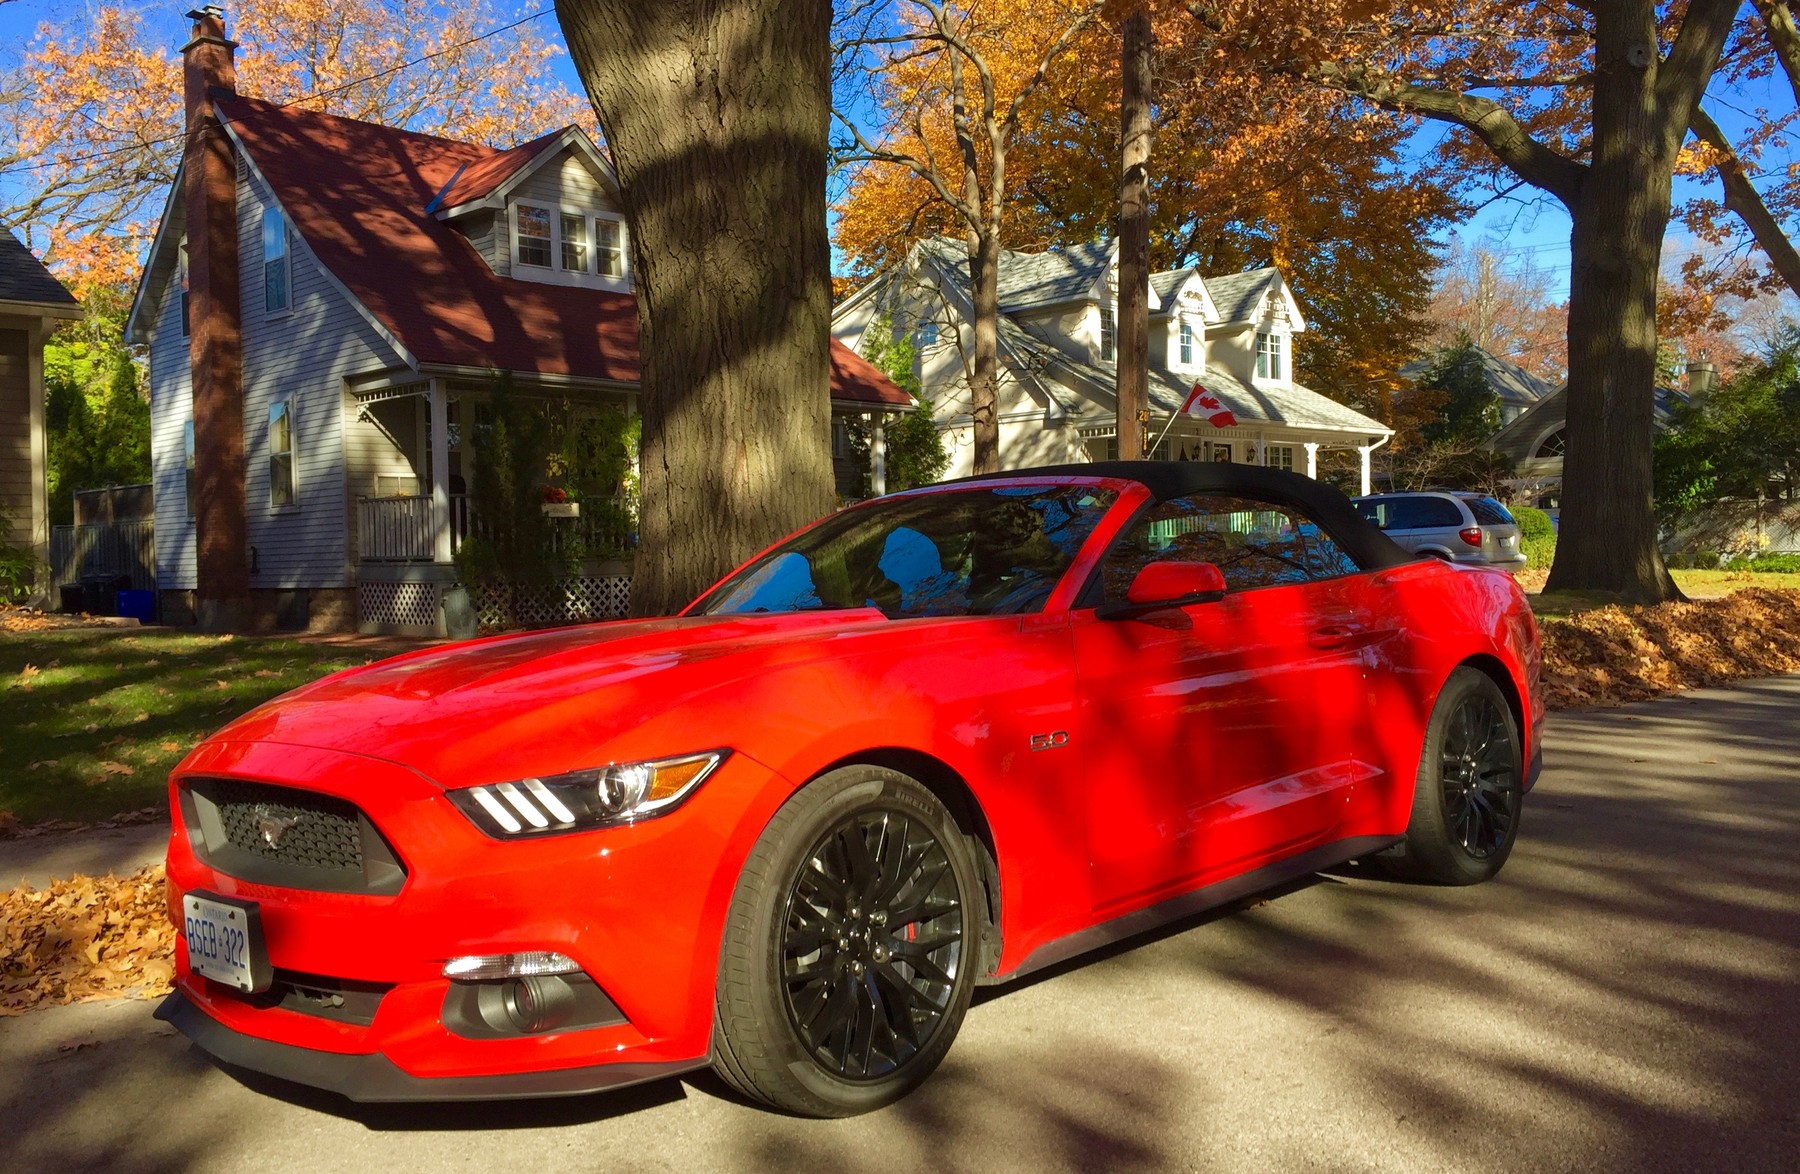 Ford Mustang | R.G. Beltzner